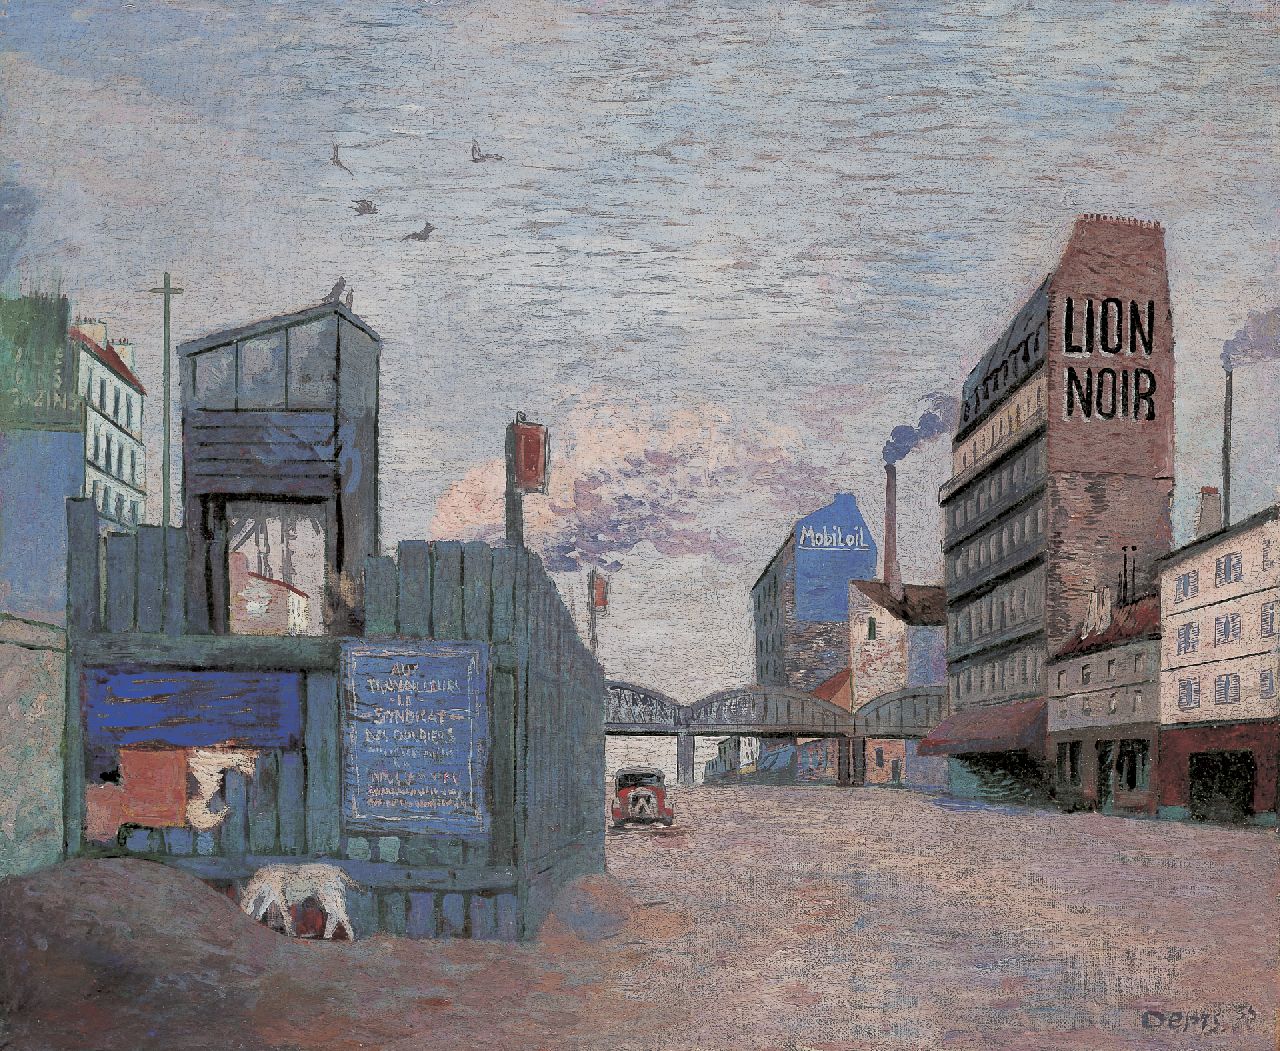 Oepts W.A.  | Willem Anthonie 'Wim' Oepts, Lion Noir, Parijs, olieverf op doek 38,1 x 46,1 cm, gesigneerd rechtsonder en gedateerd '35